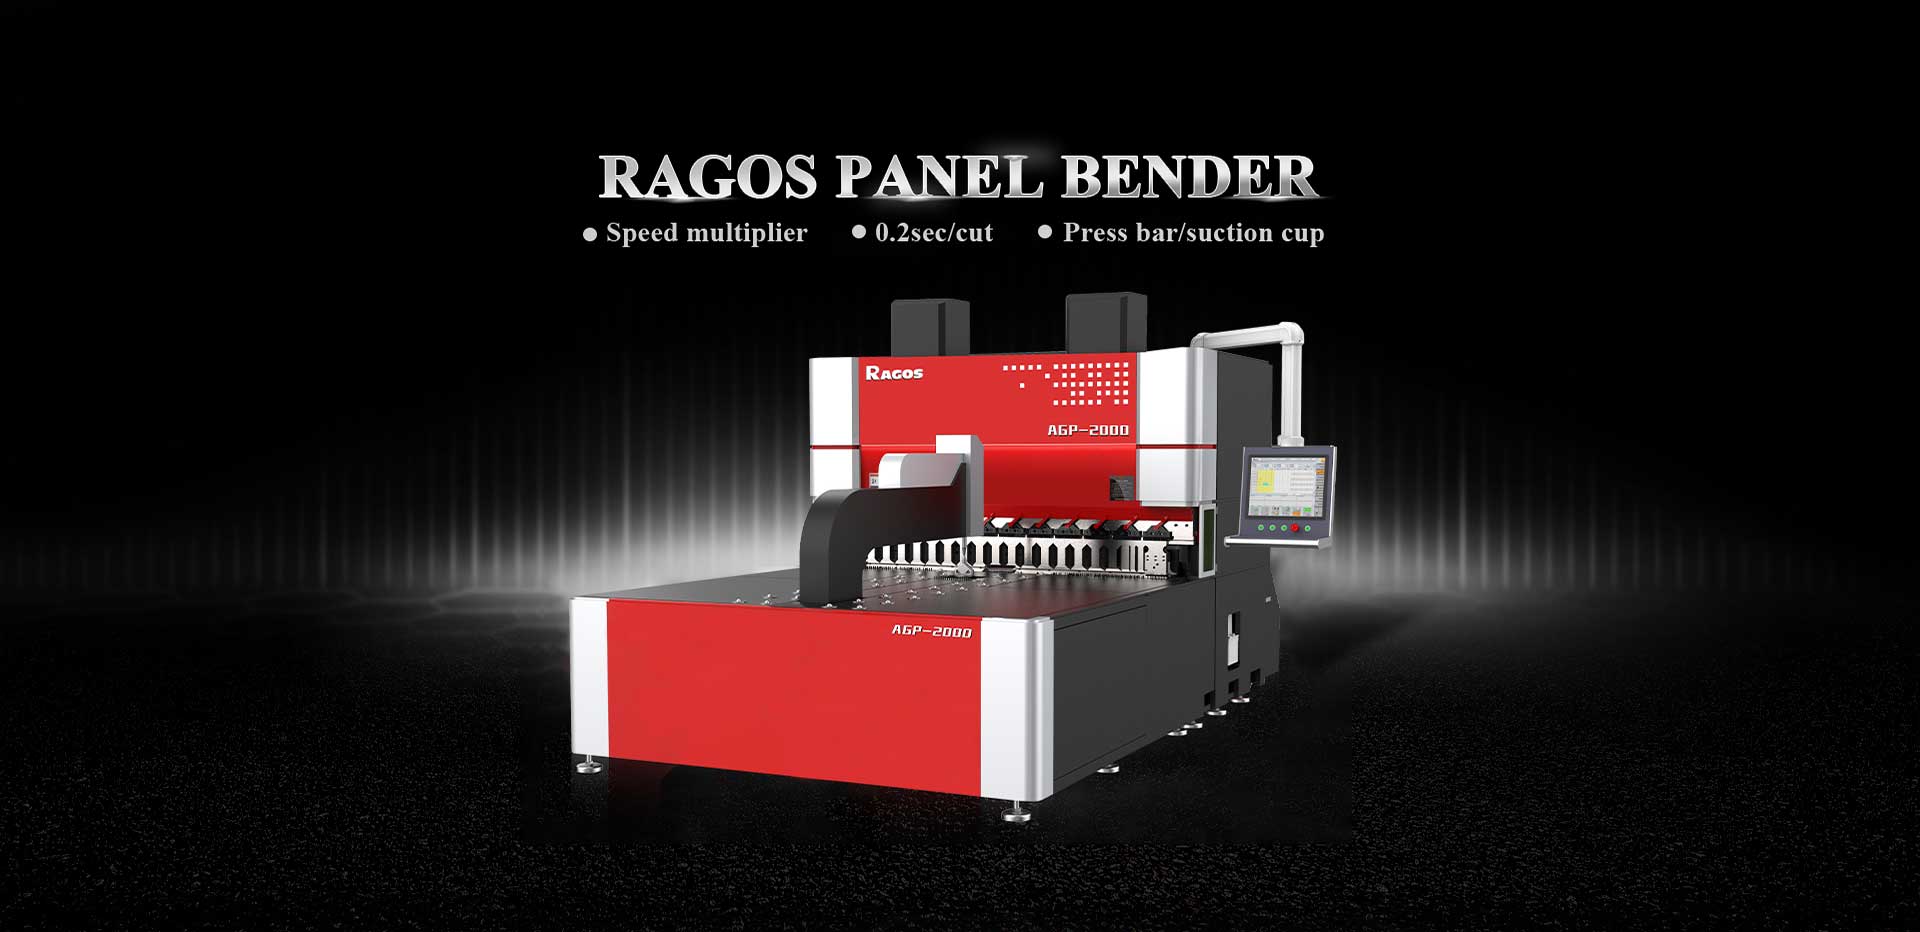 RAGOS AGP-2000 Model panel bender series parameter